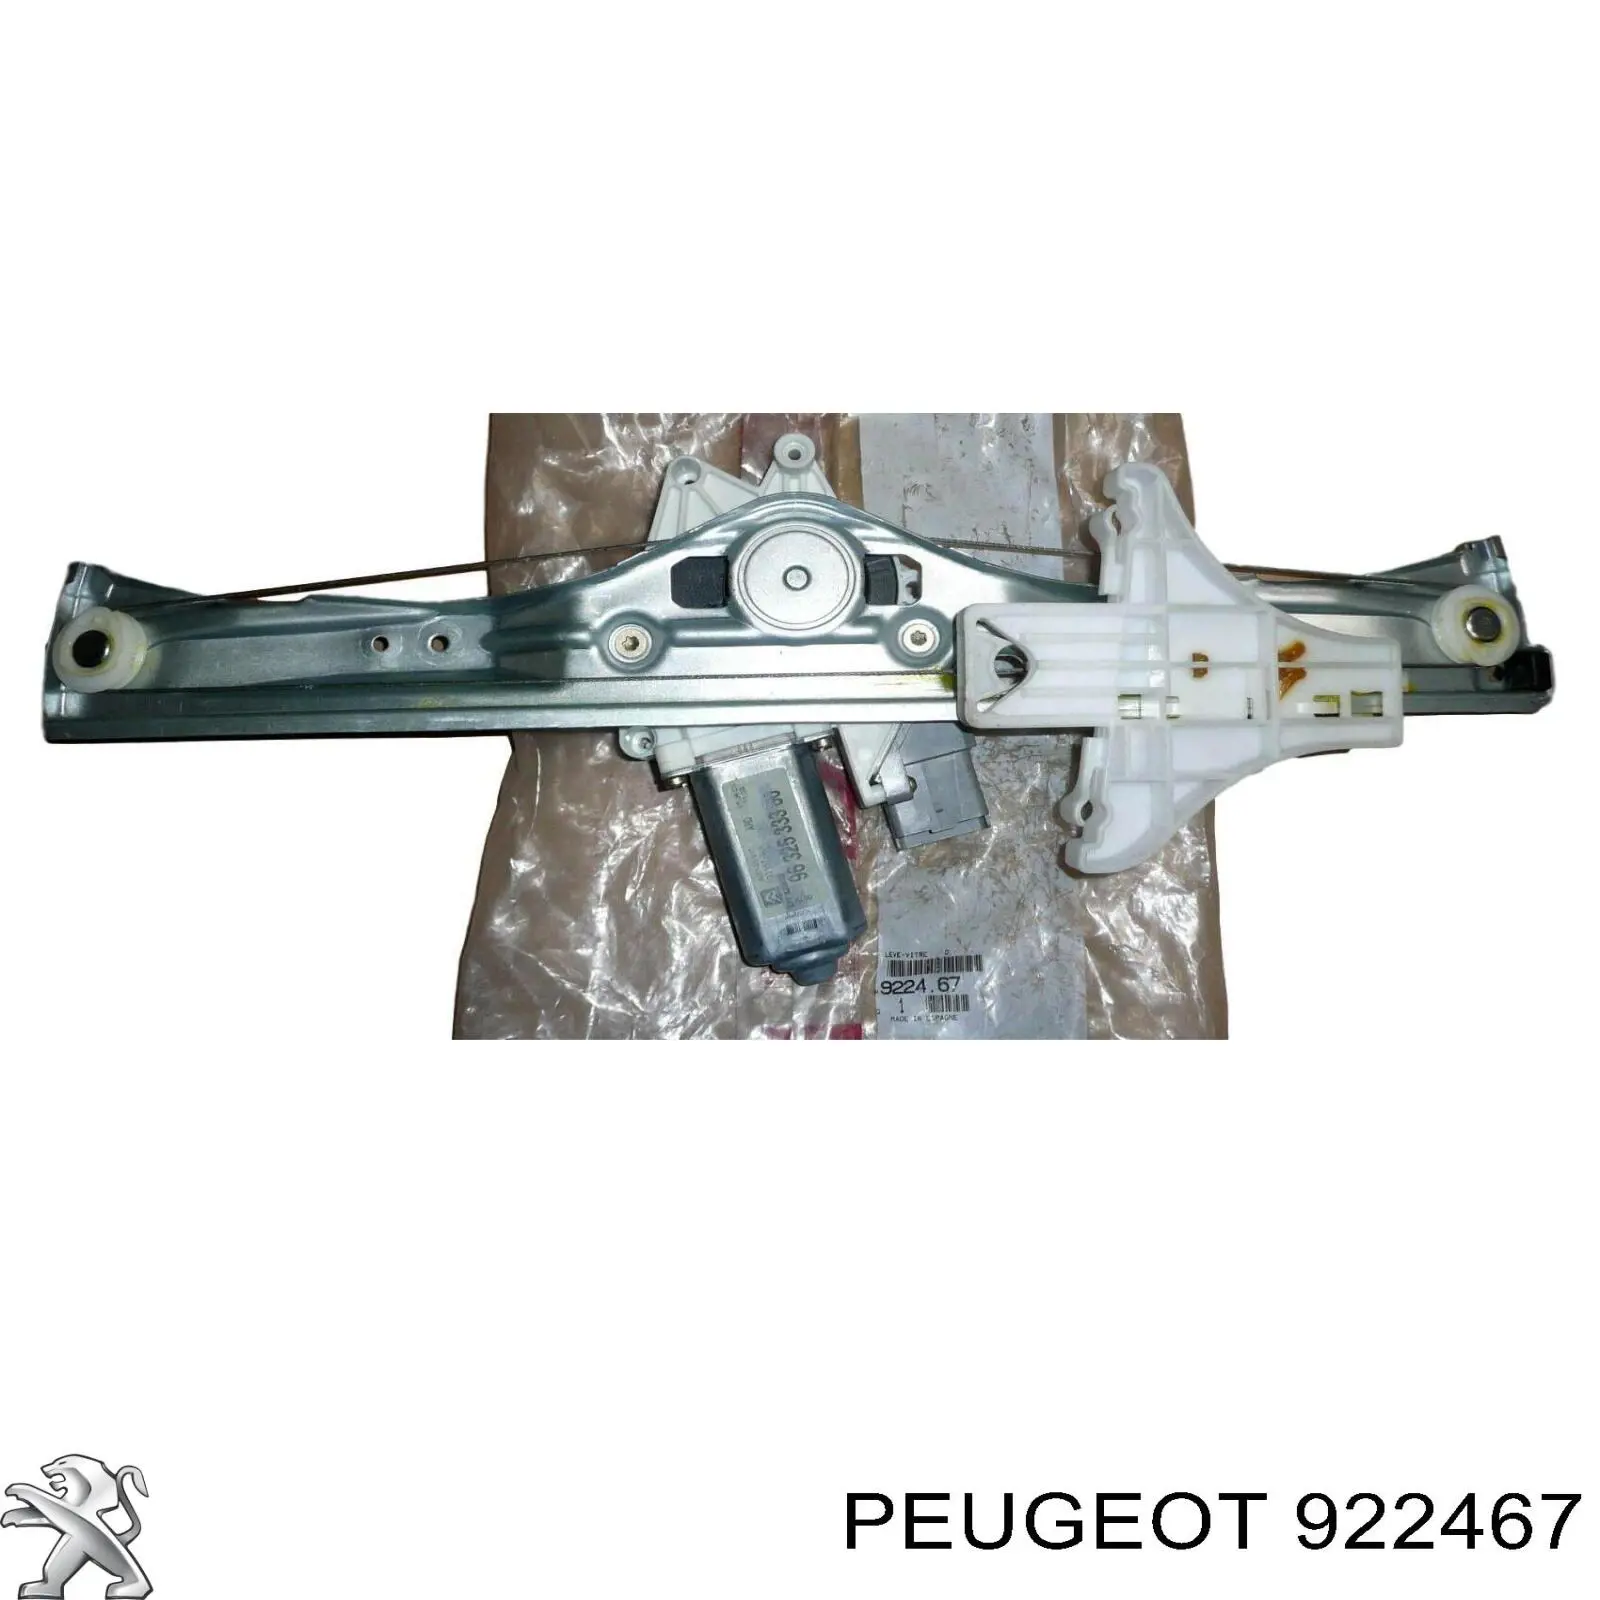 922467 Peugeot/Citroen mecanismo de elevalunas, puerta trasera derecha